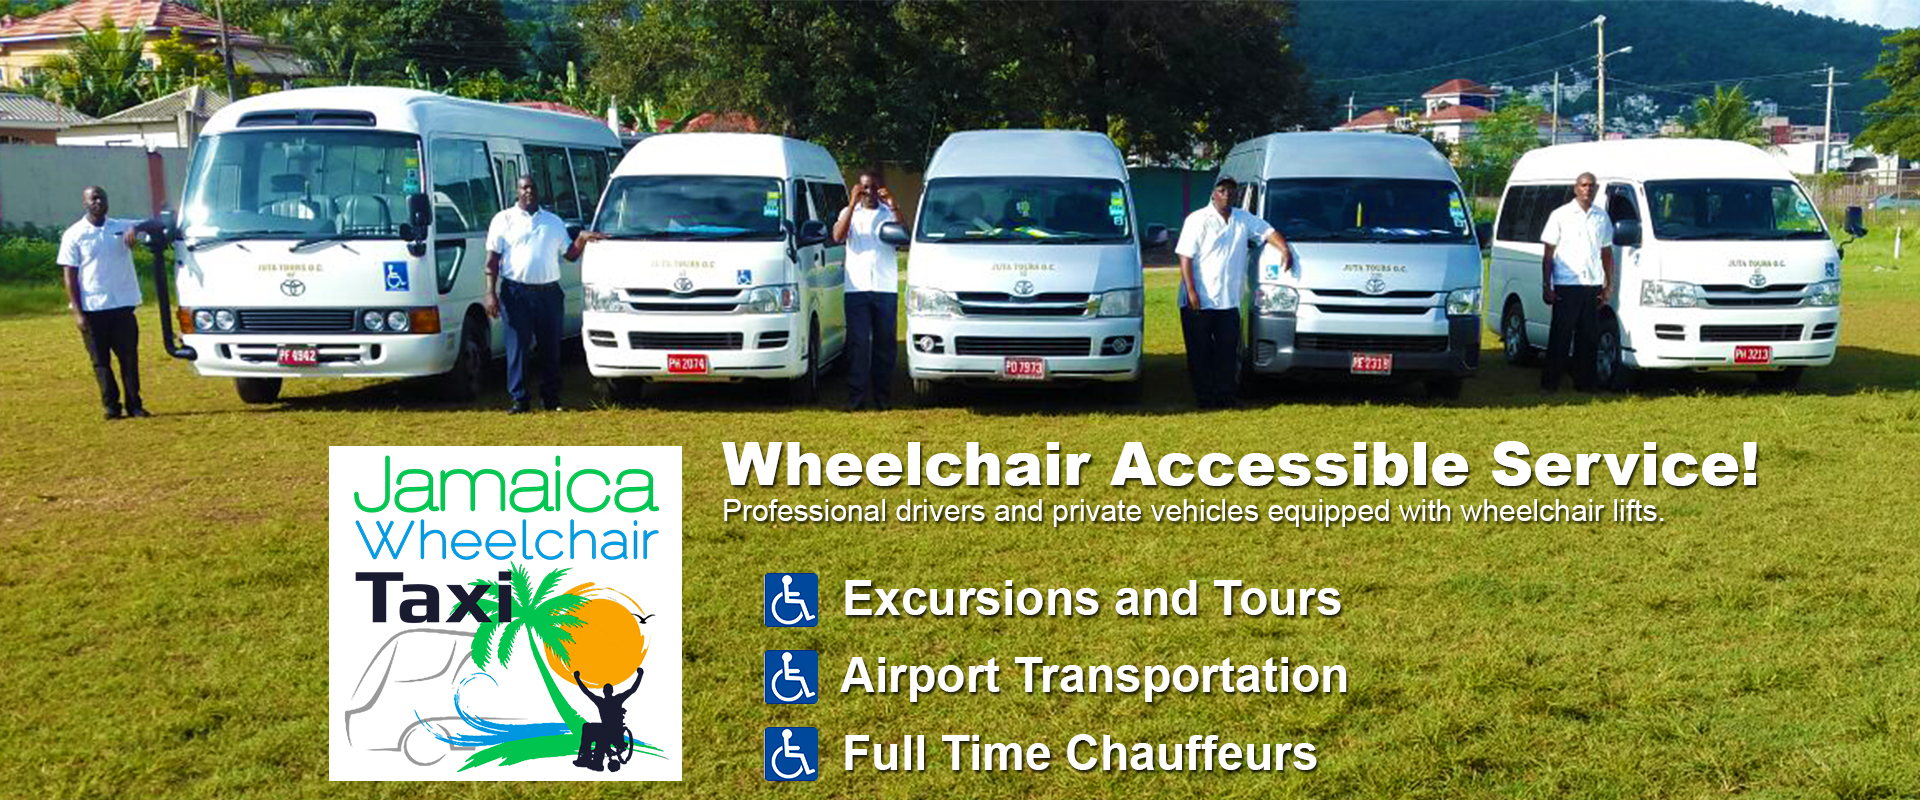 Jamaica Wheelchair Taxi - www.jamaicawheelchairtaxi.com - transport for wheelchair passengers